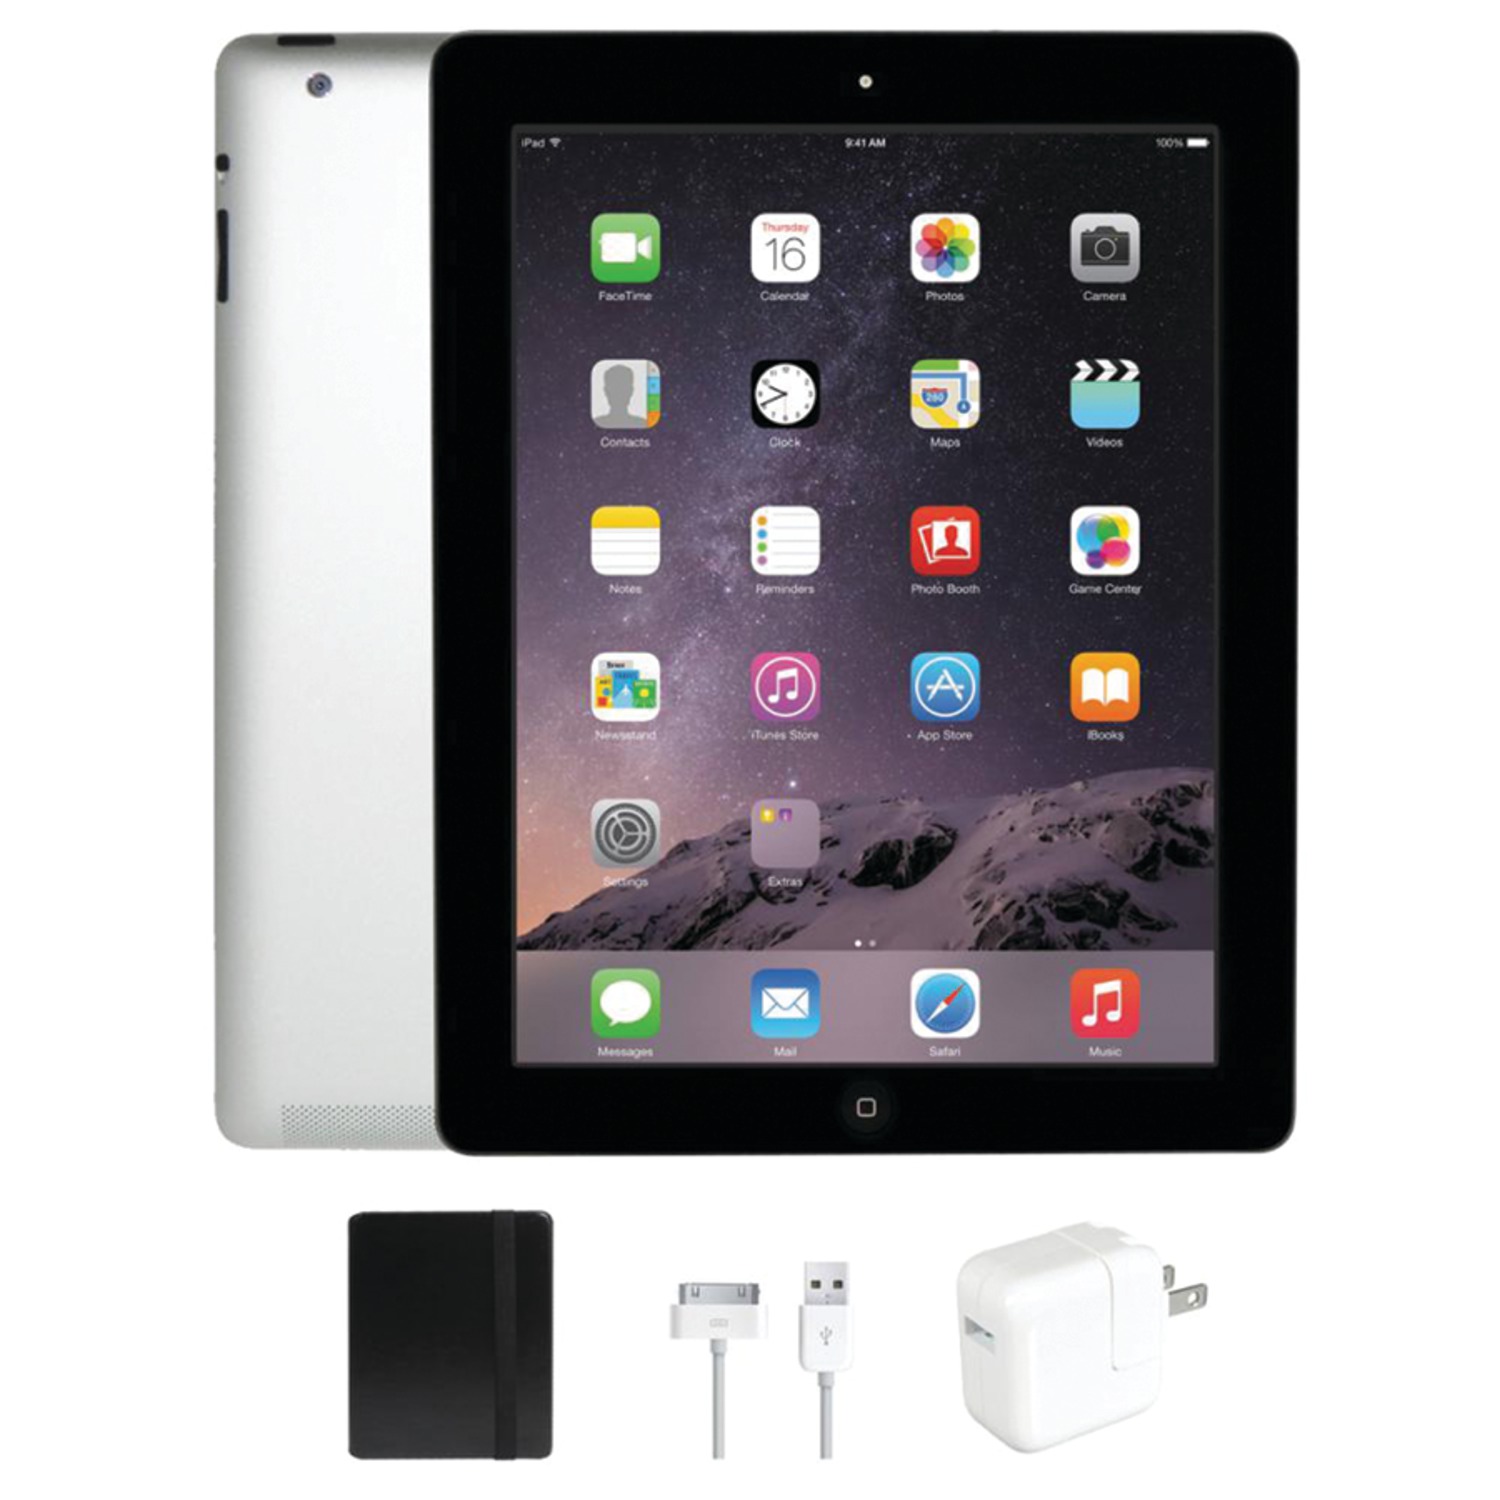 Restored MP2 - Apple iPad 2 with Wi-Fi 16GB - Black (2nd generation) MC769 (Refurbished) - image 4 of 4